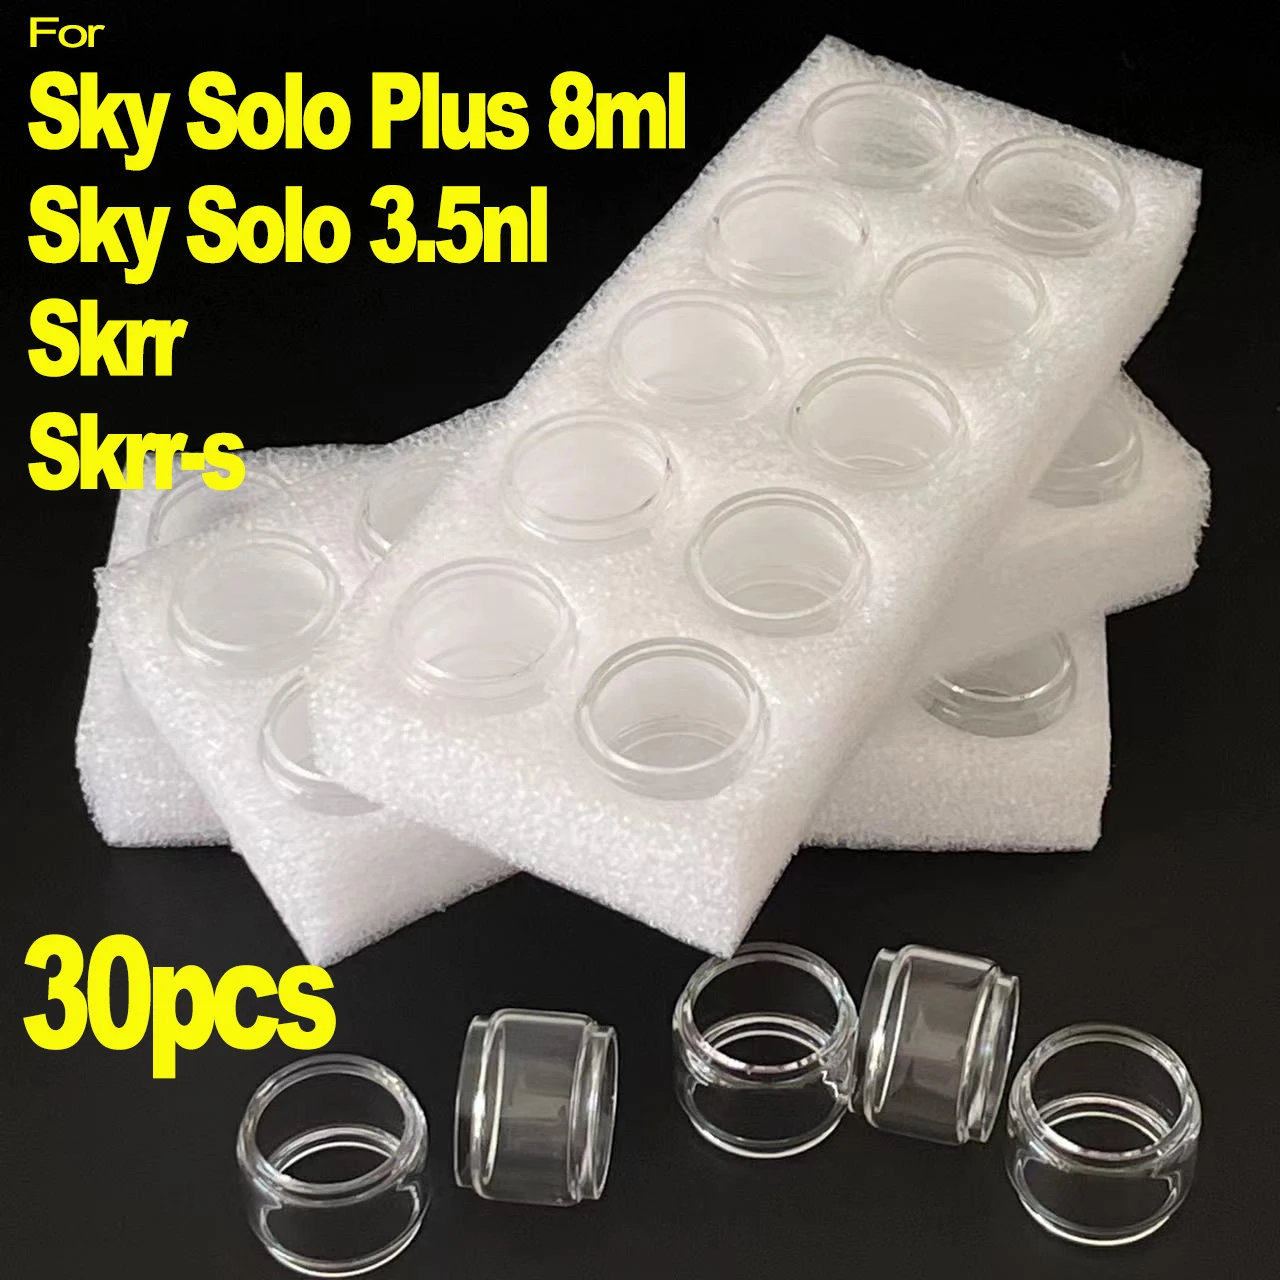 

30PCS Replacement Glass Tube Tank for Vaporesso Sky Solo 3.5ml Sky Solo Plus 8ml Skrr Skrr-s 8ml E Cigarette Bubble Bulb Glass